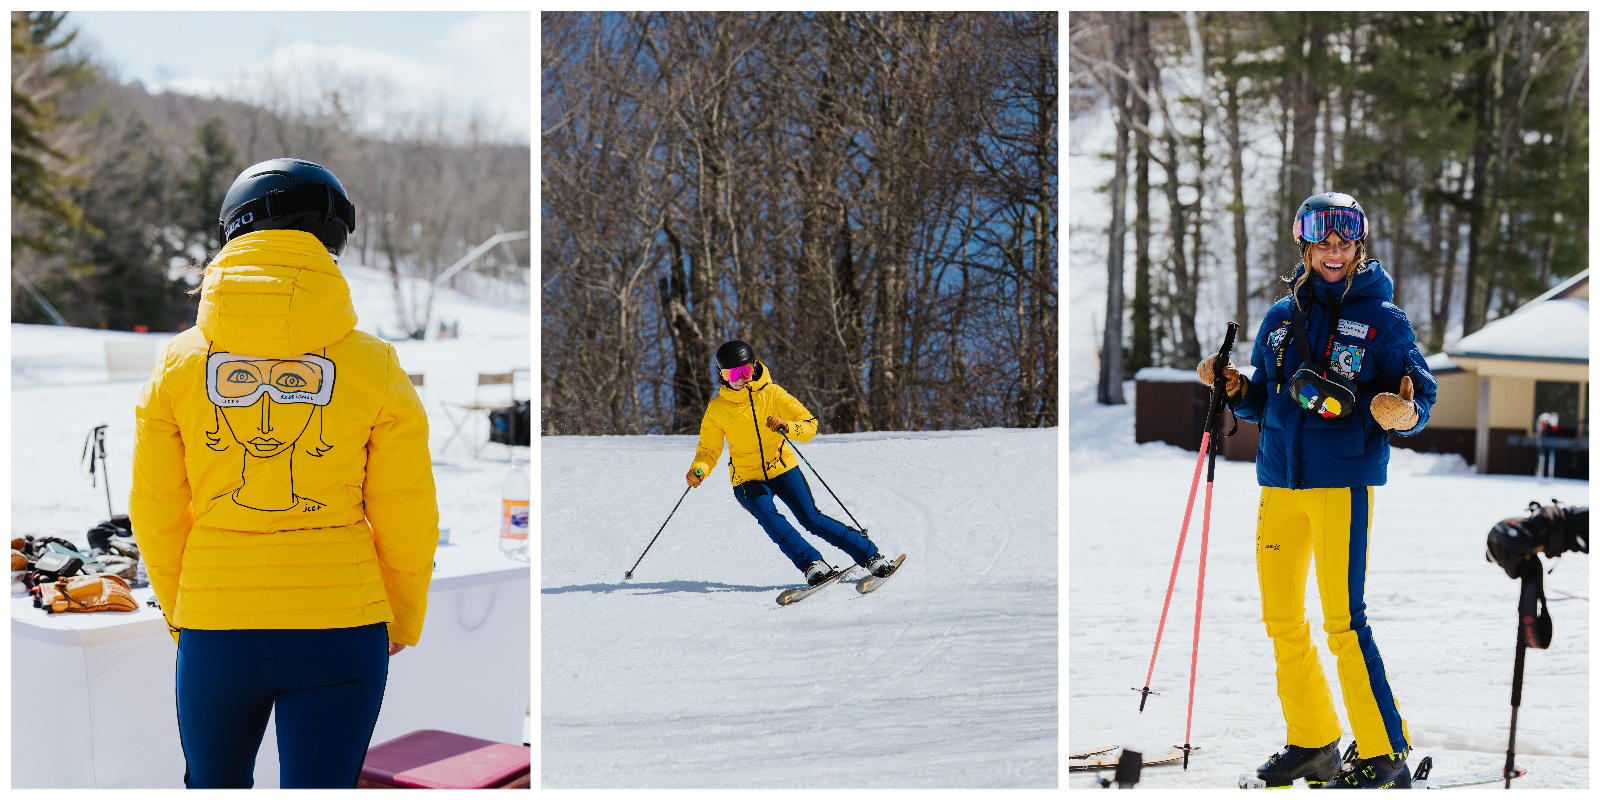 TSM, The Ski Monster, skiing, ski test, ski demo, Ladies Day, Lady Monsters, Goldbergh, Sunapee, winter, snow, New Hampshire, gear test